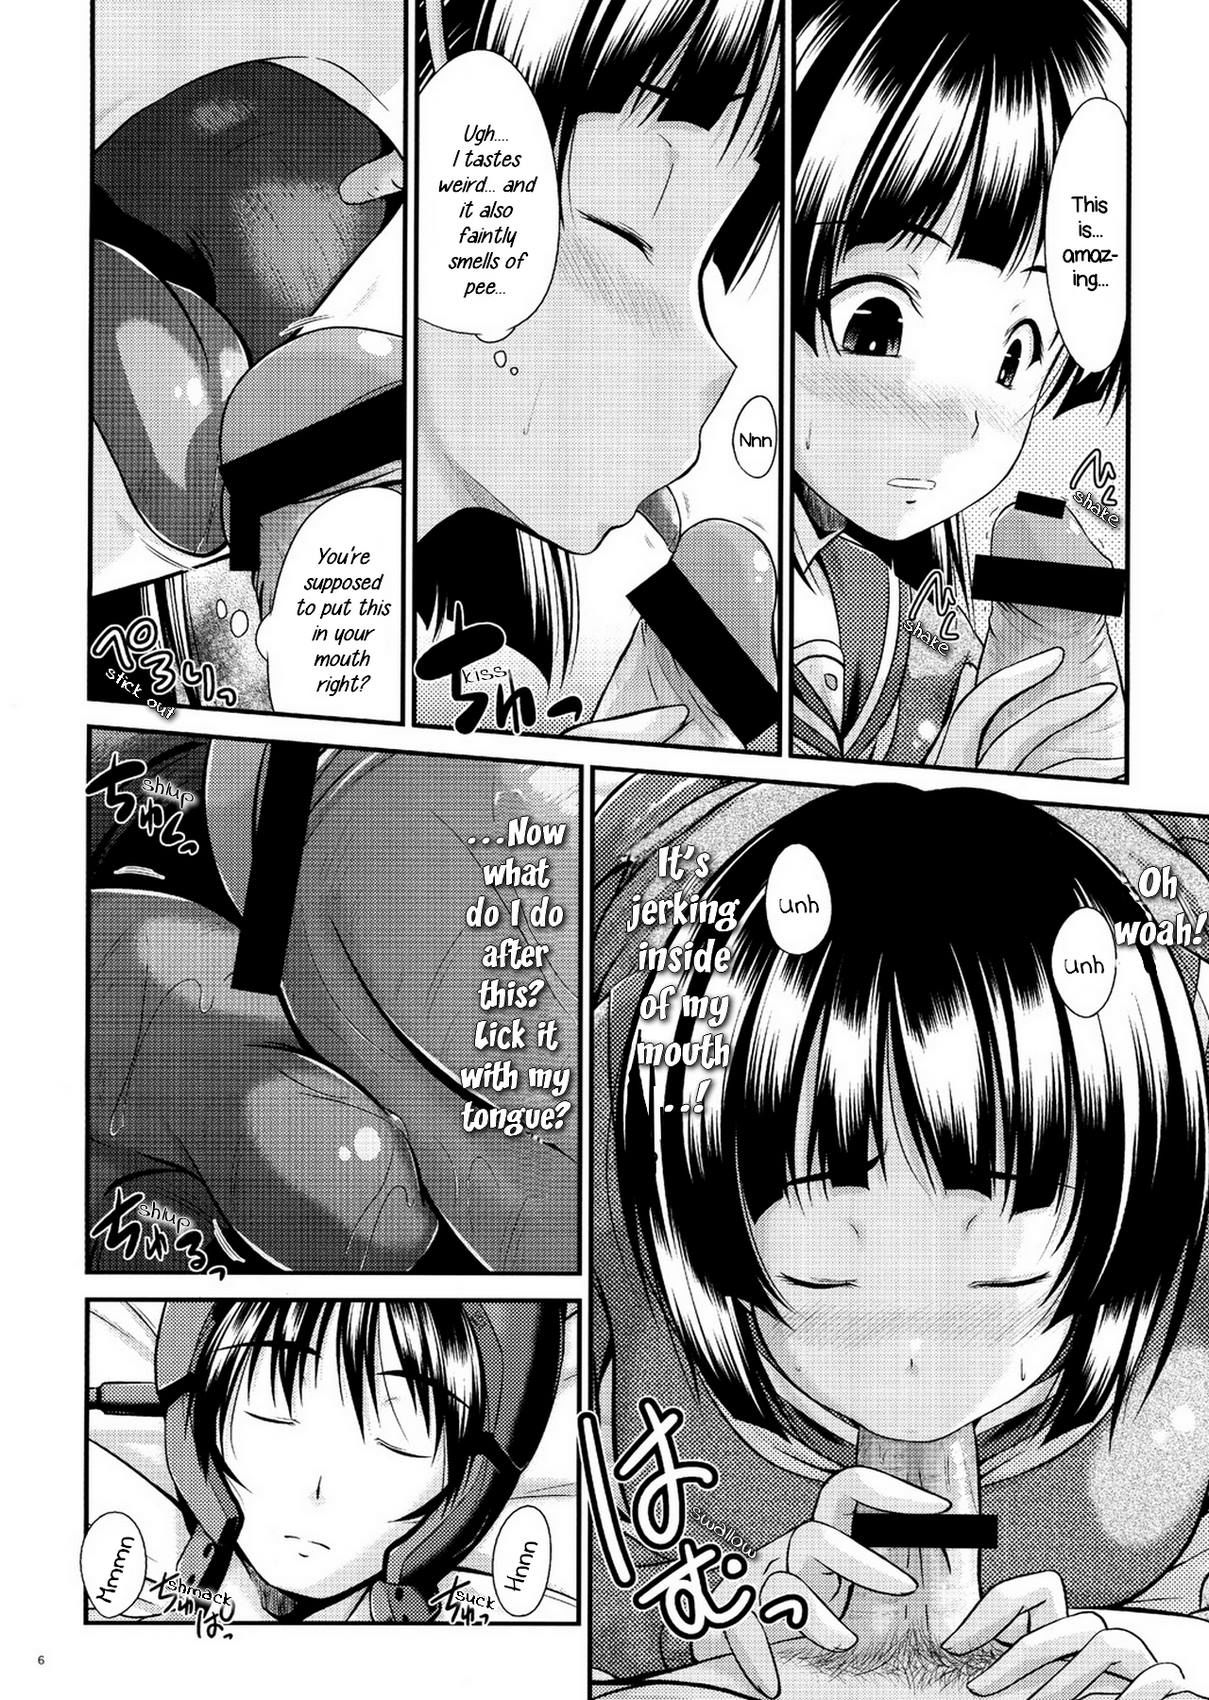 Nagisano Usagi page 5